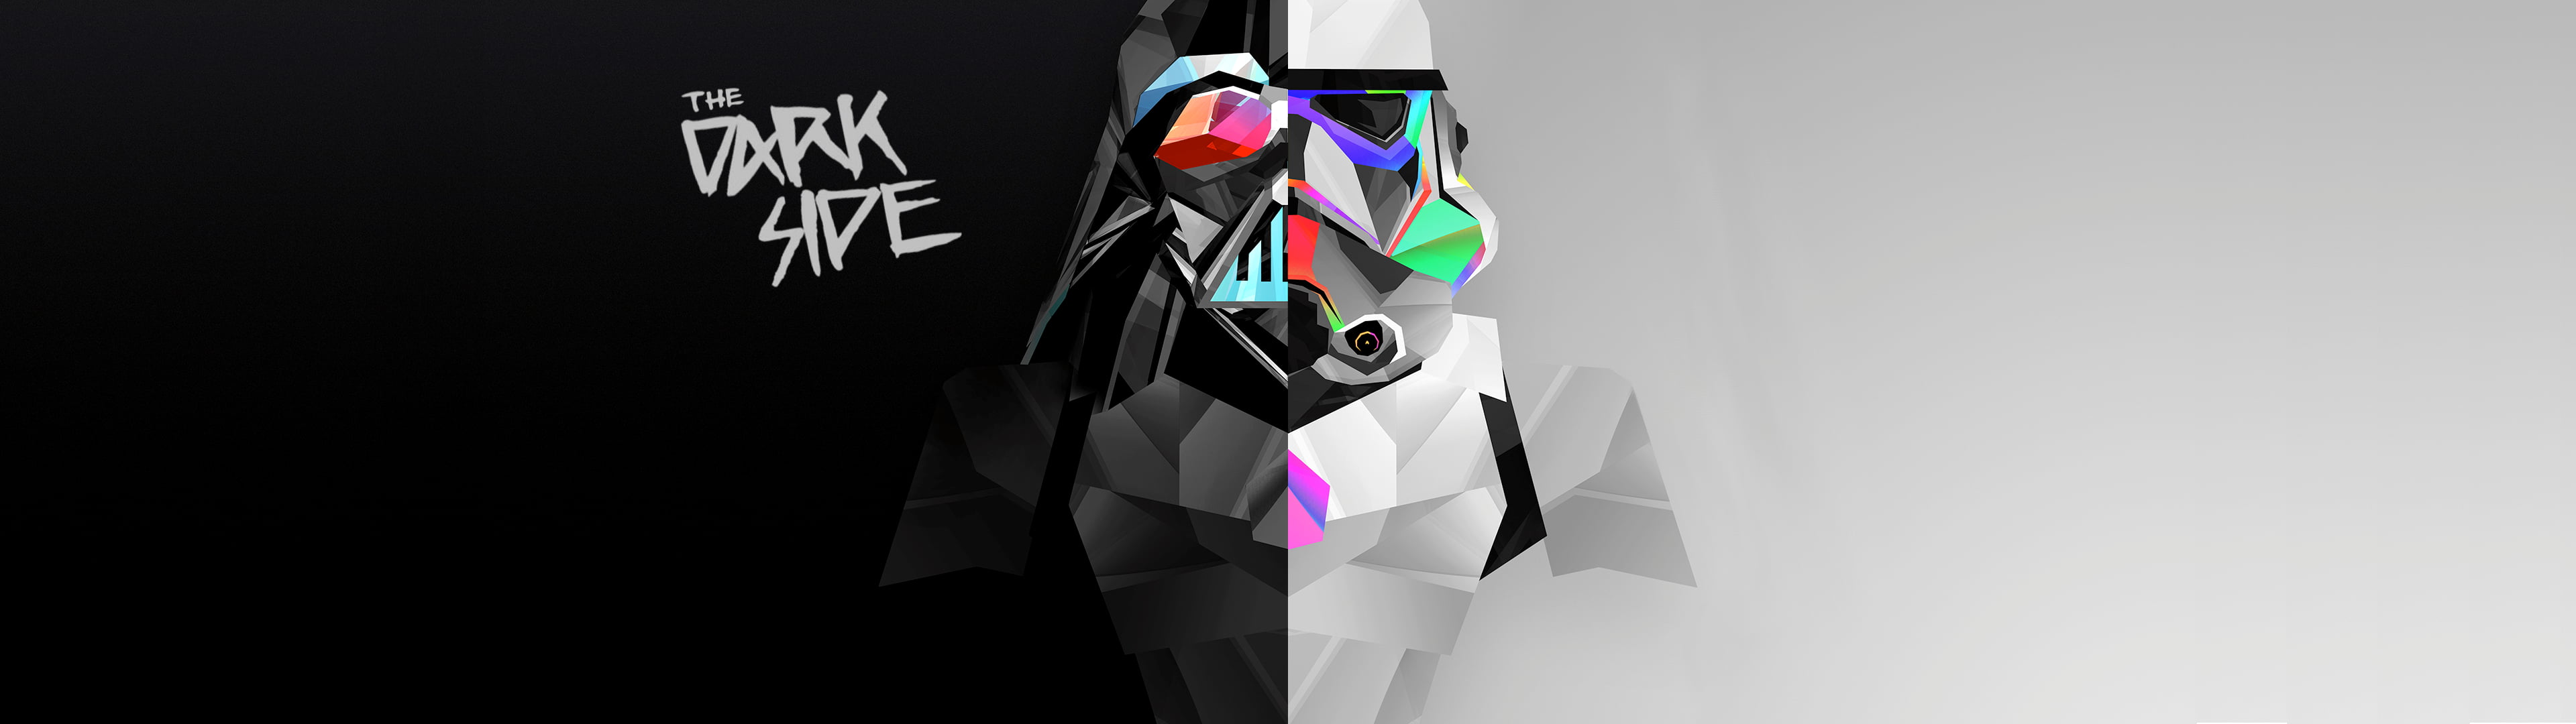 Online crop | Darth Vader ilustration, multiple display, dual monitors